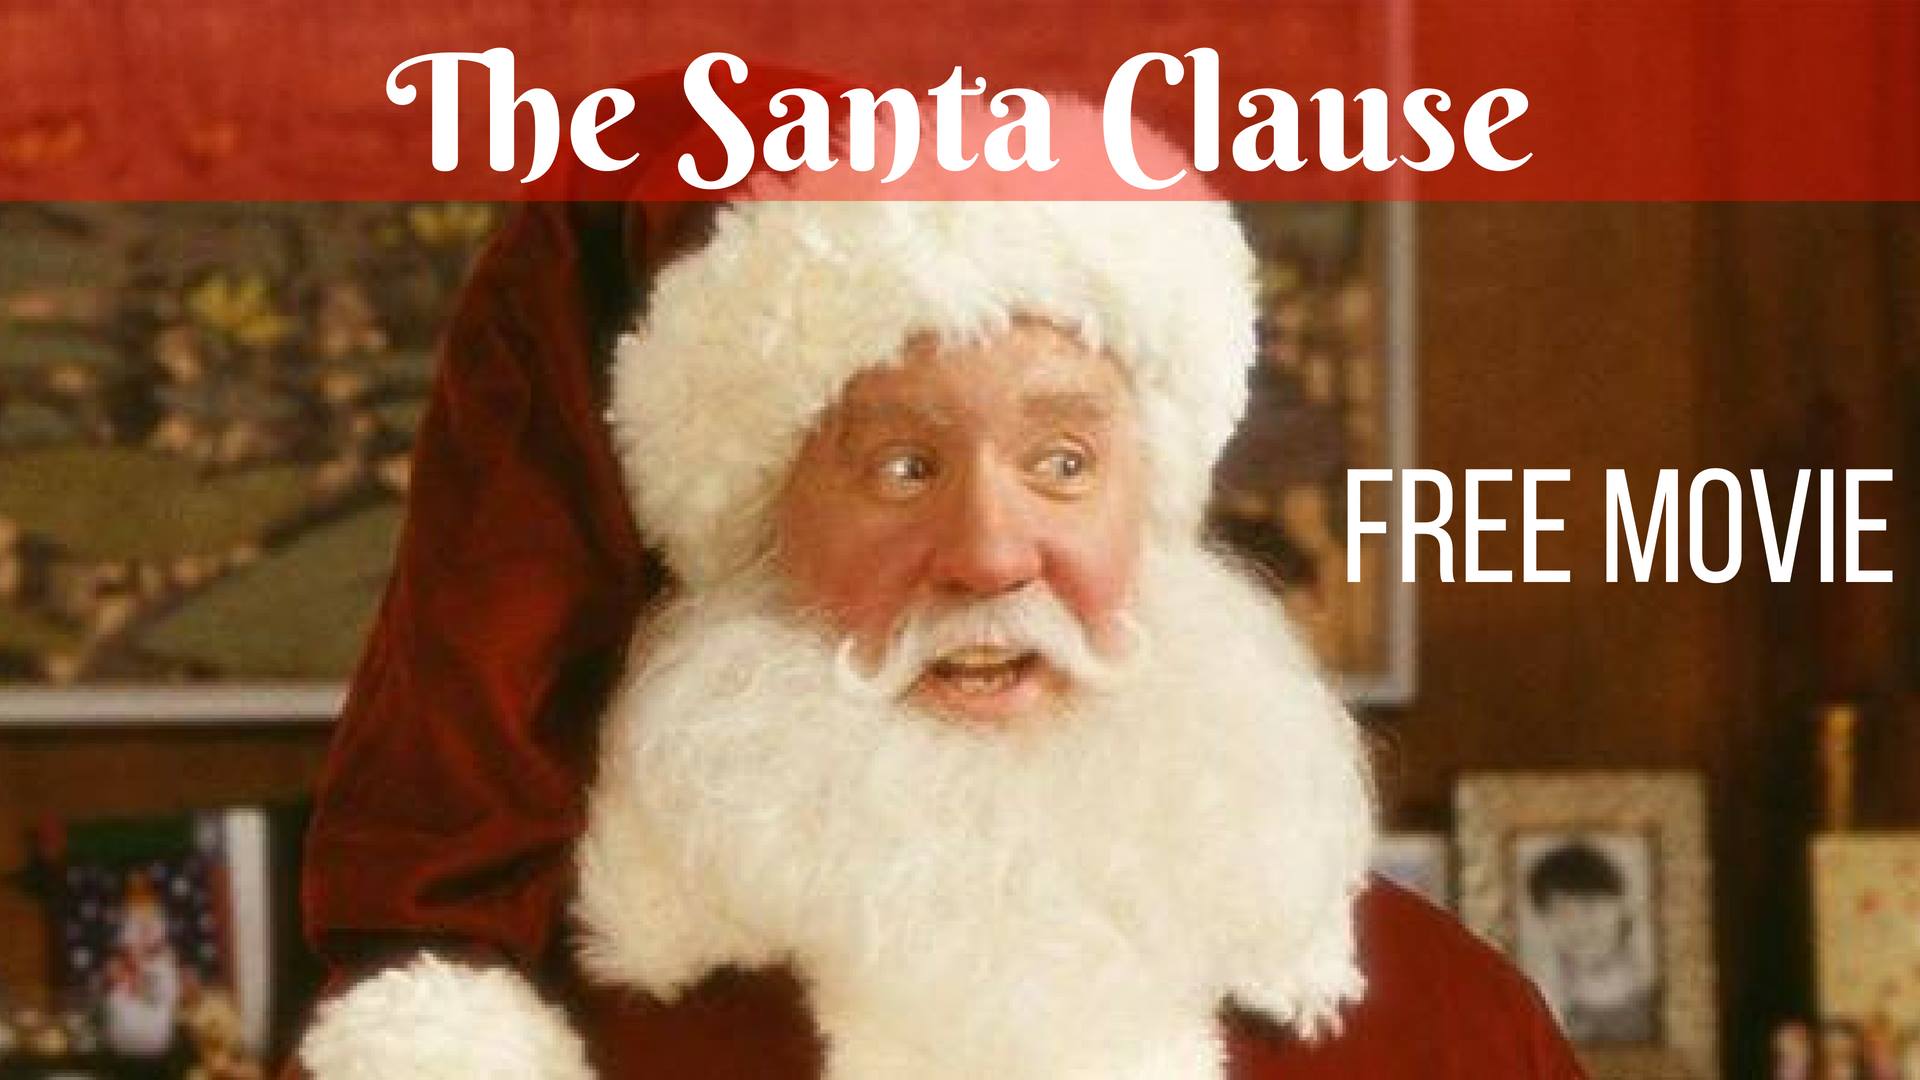 Free Movie Santa Clause Plaza Theatre Downtown Garland